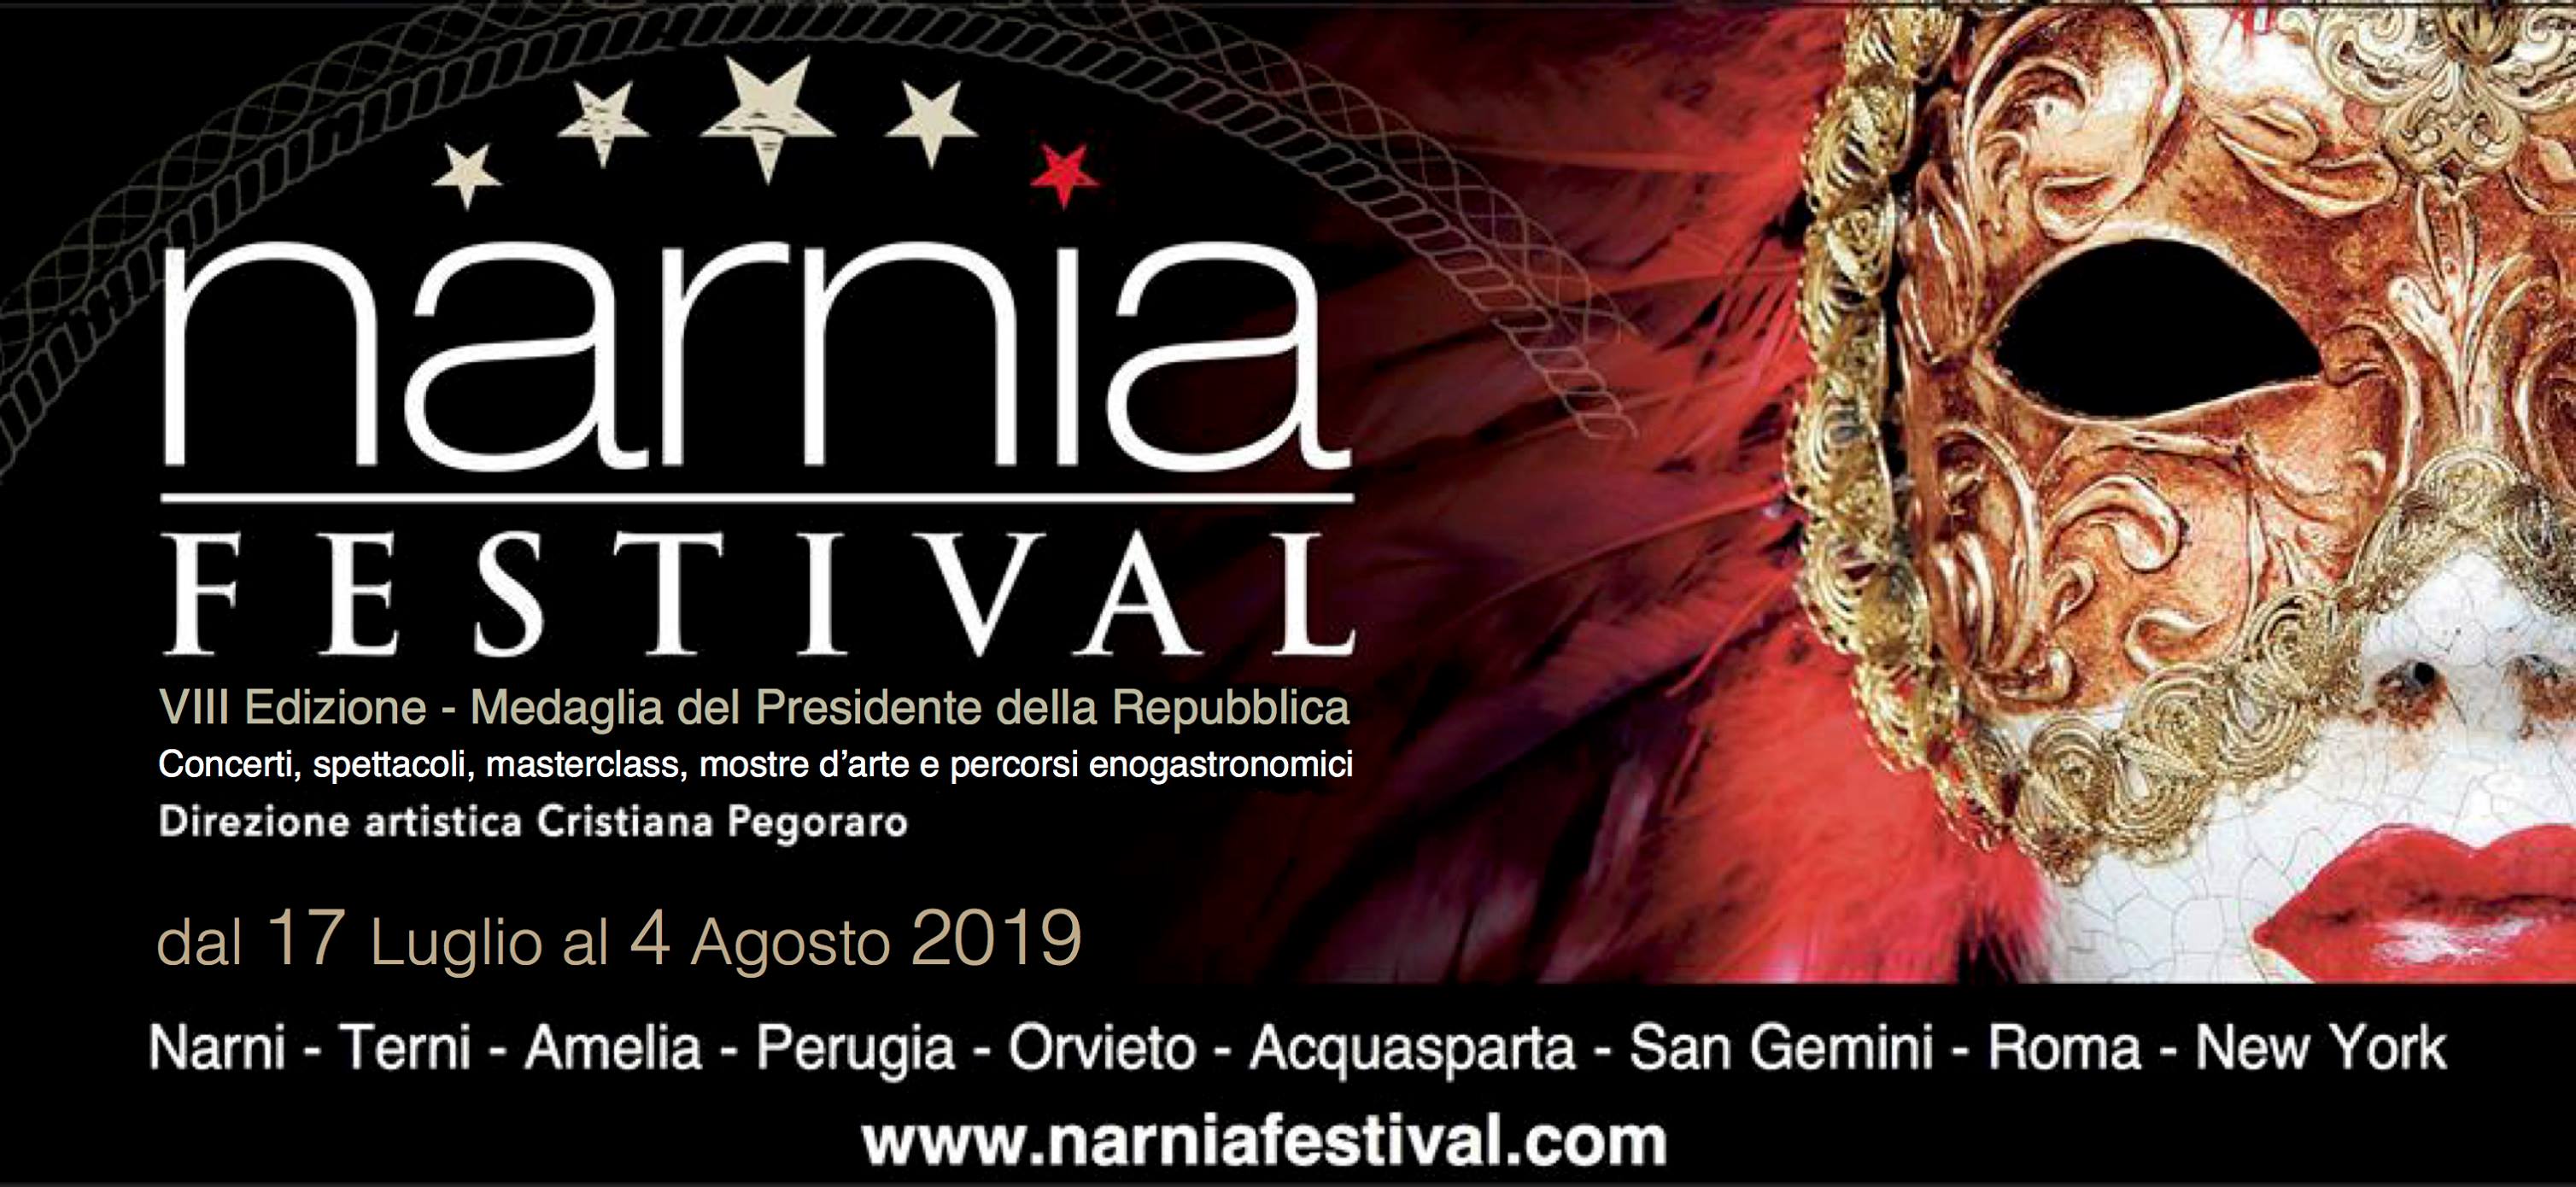 narnia festival 2019